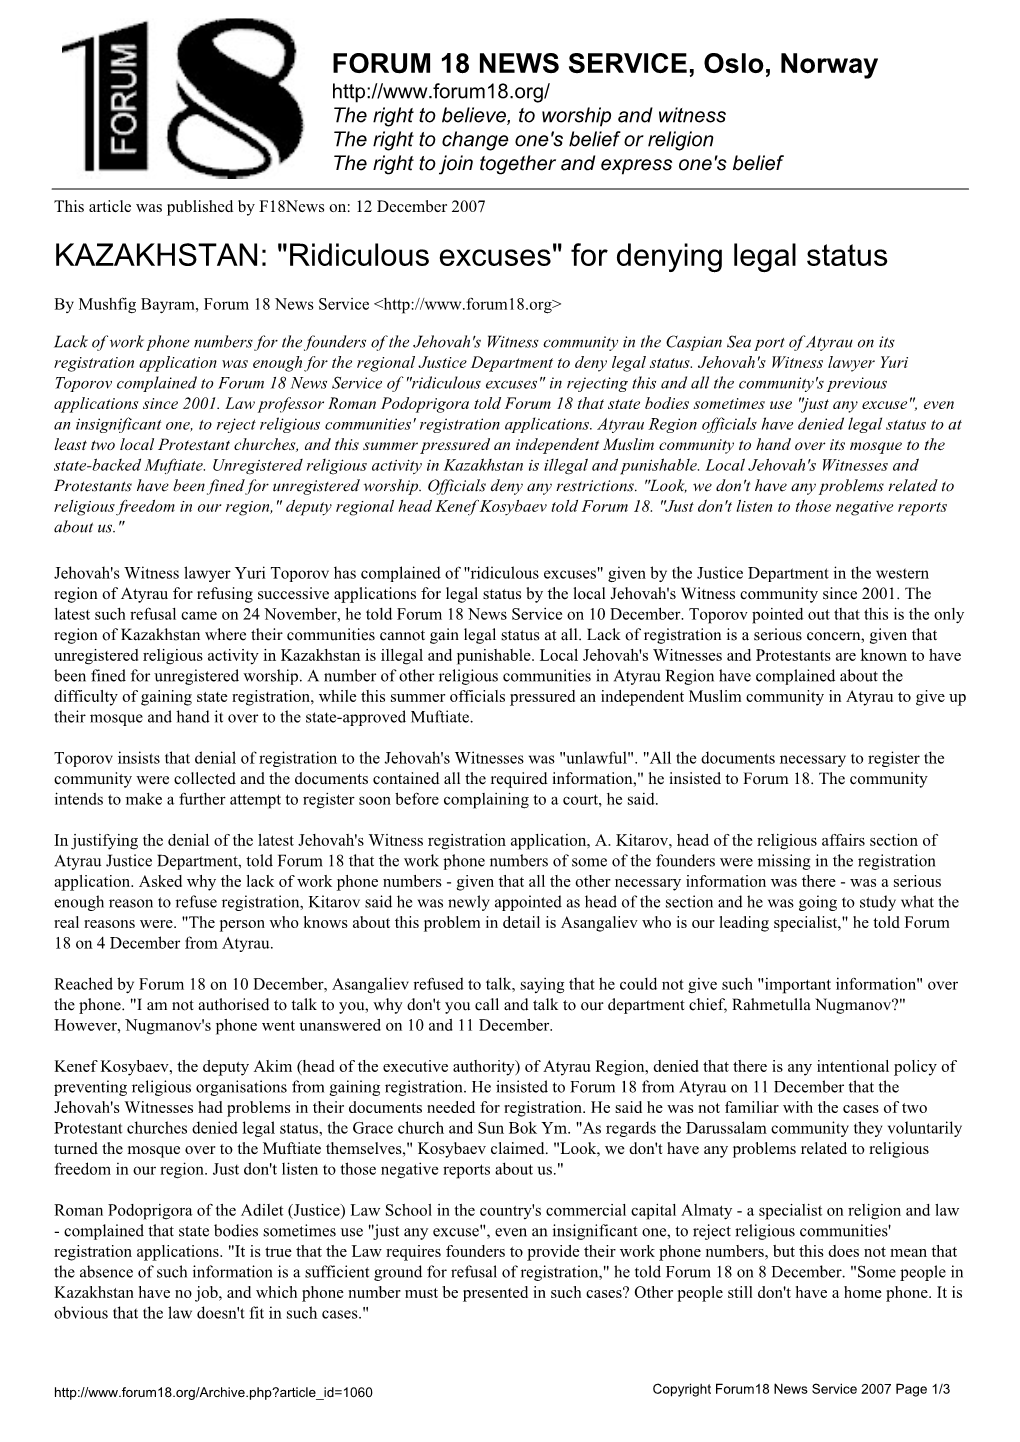 KAZAKHSTAN: "Ridiculous Excuses" for Denying Legal Status